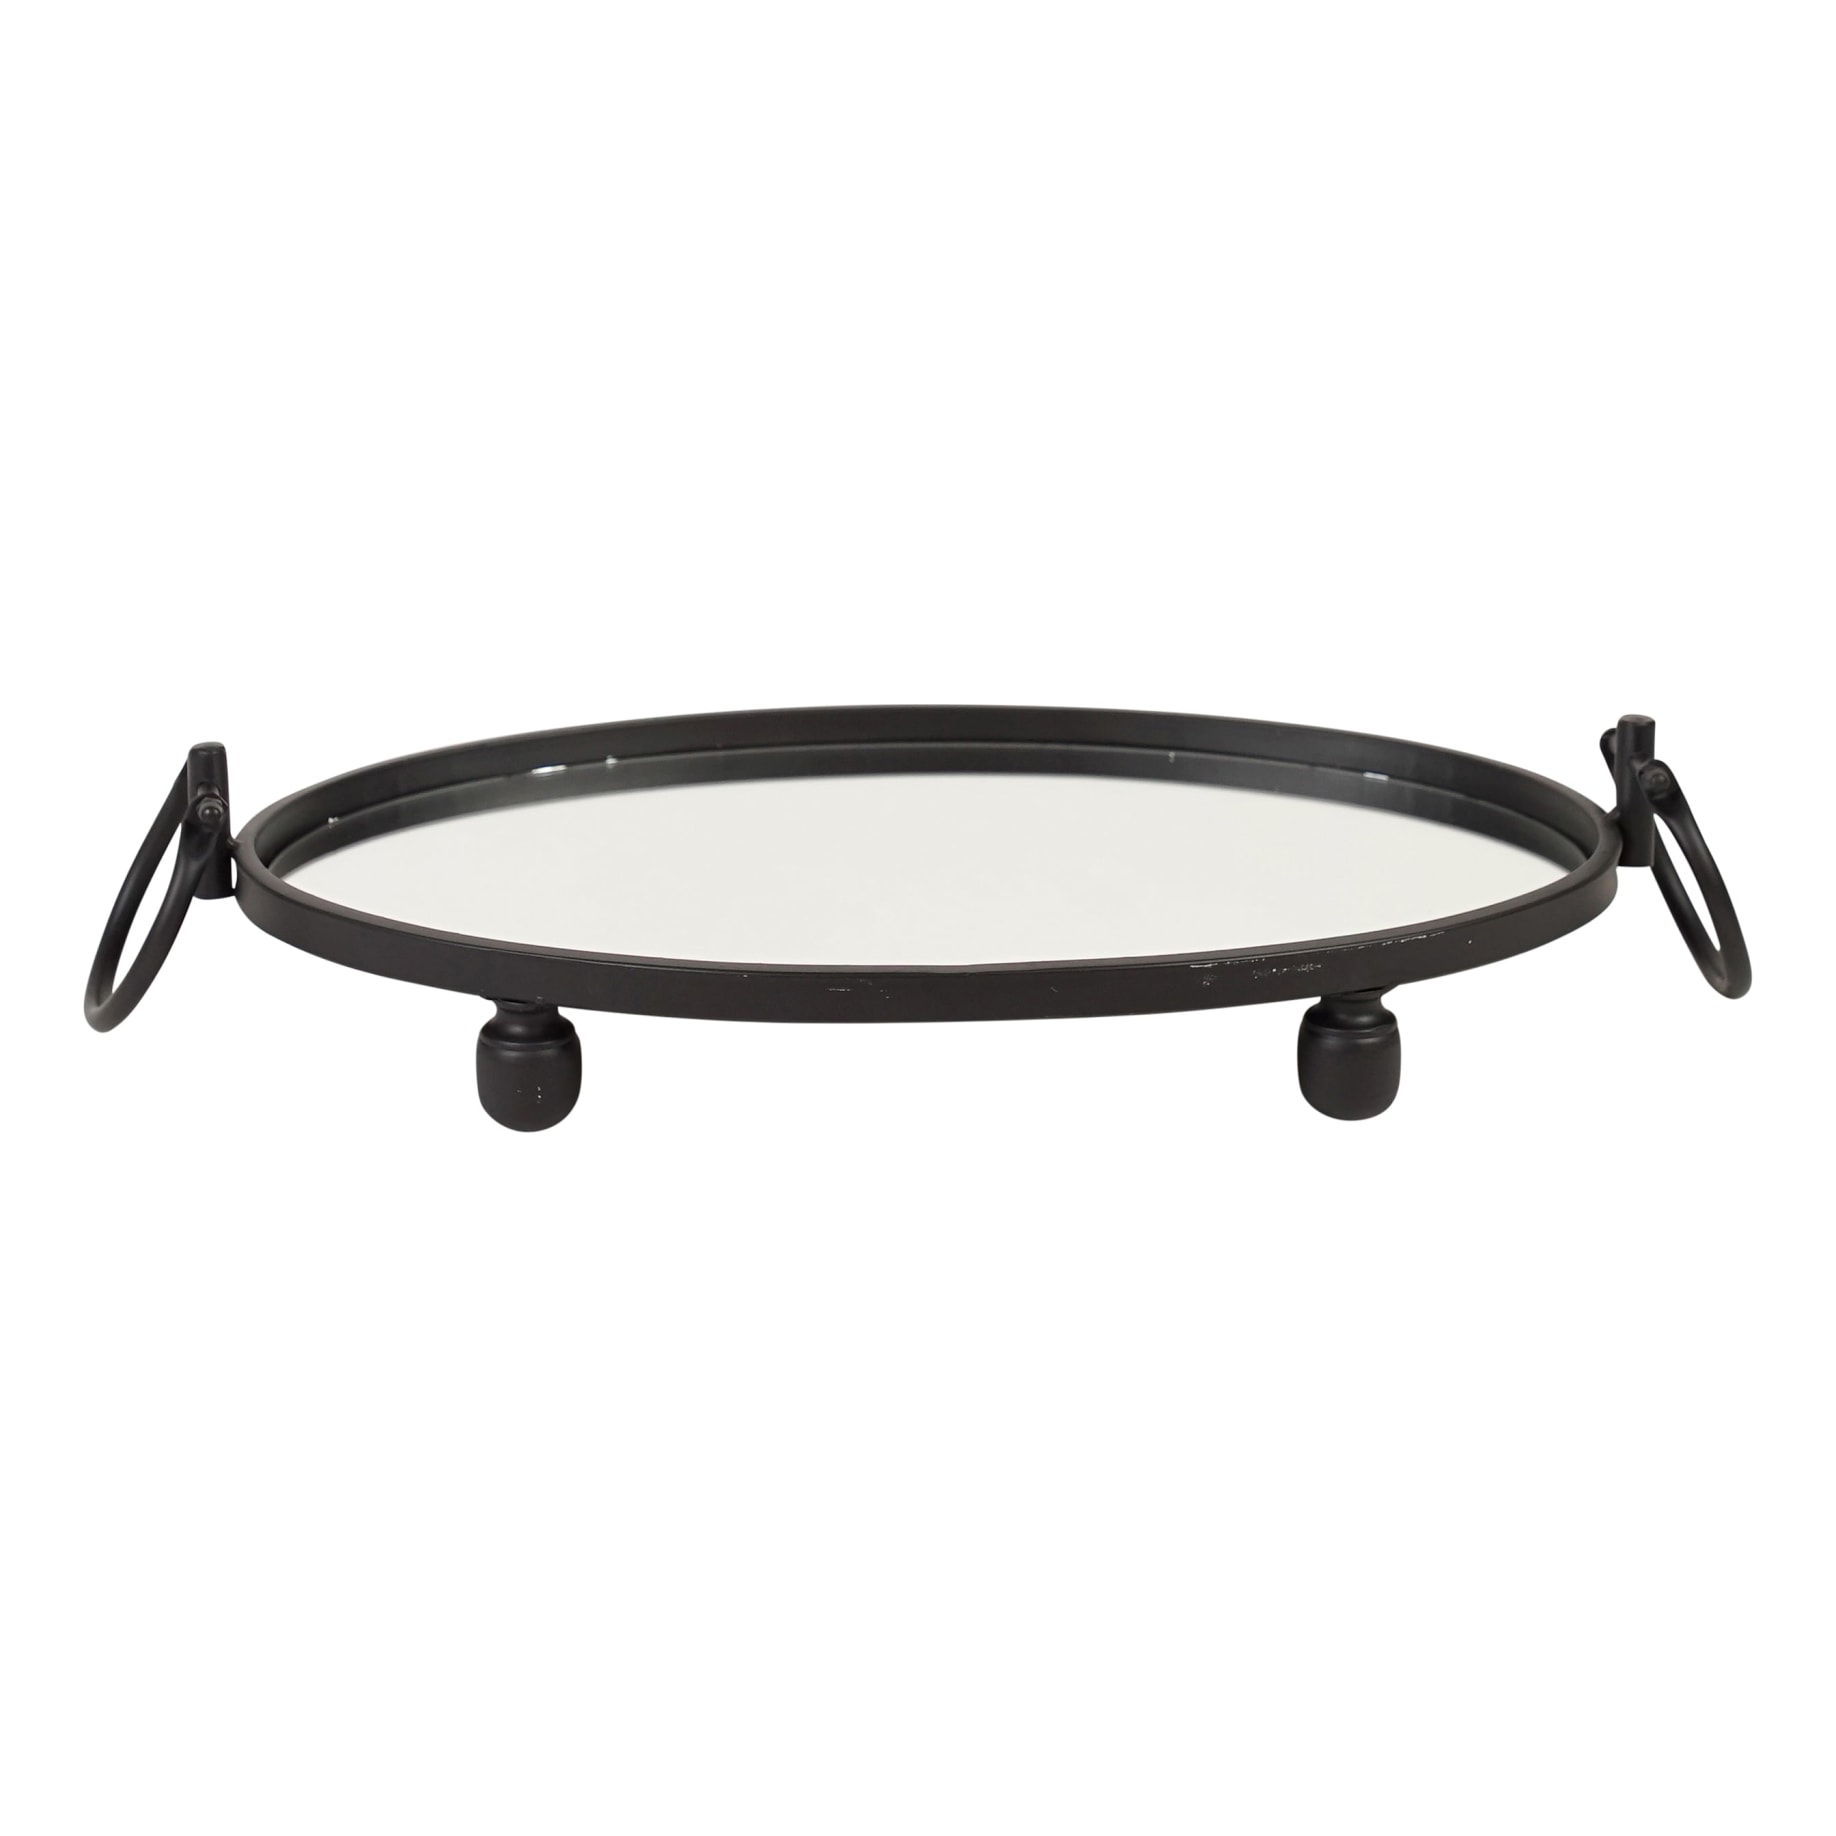 Blair Oval Mirror Tray 58.5x11cm in Black